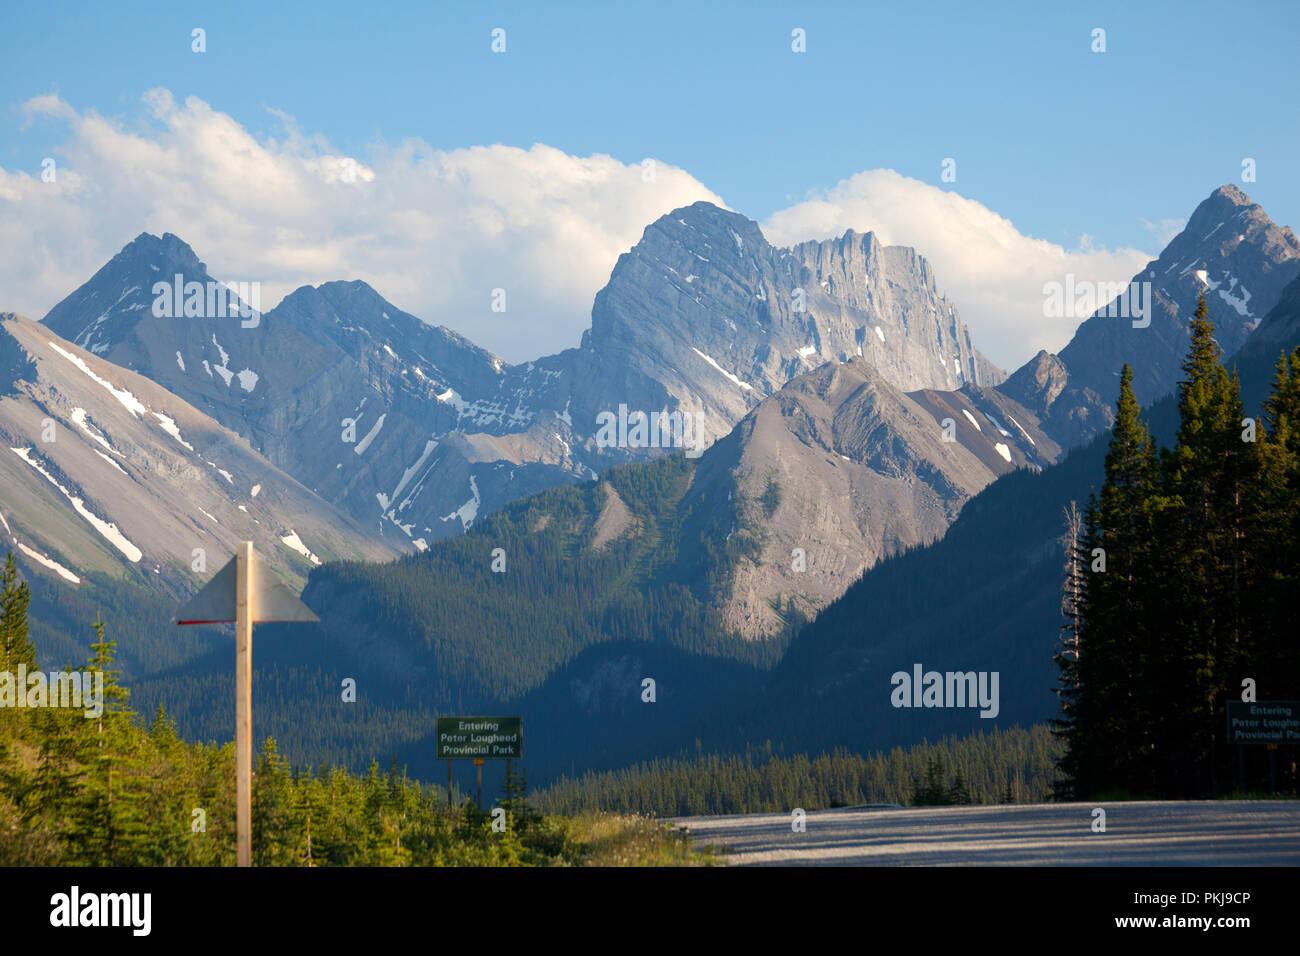 Entrance to Peter Lougheed Provincial Park. Alberta, Canada Stock Photo